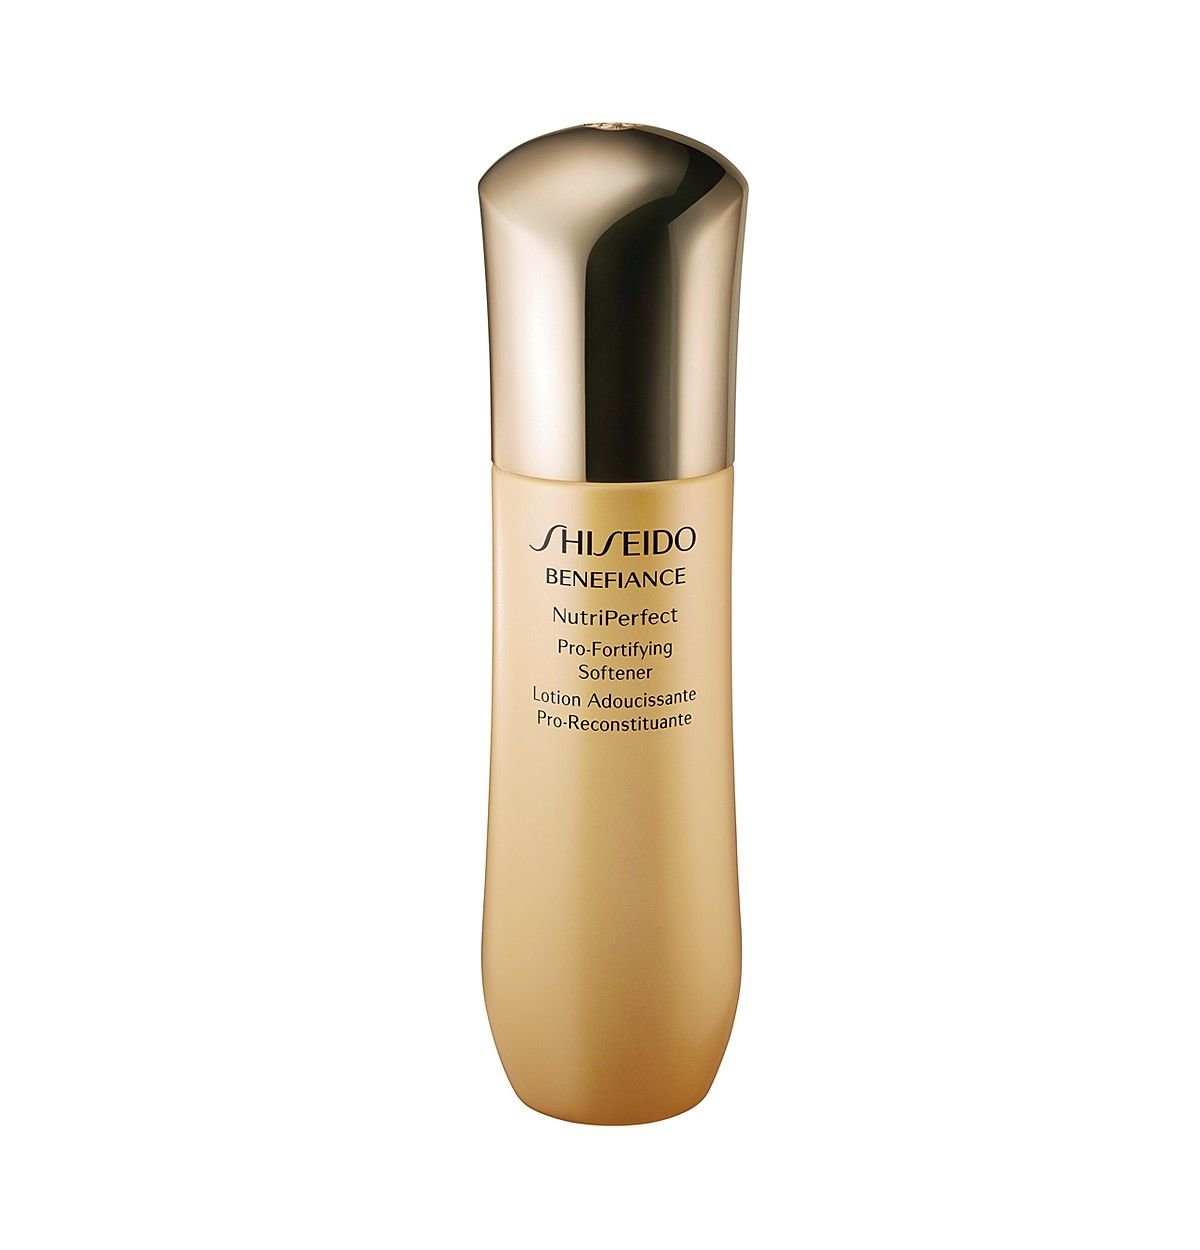 Shiseido Benefiance NutriPerfect 150ml valomasis vanduo veidui Testeris